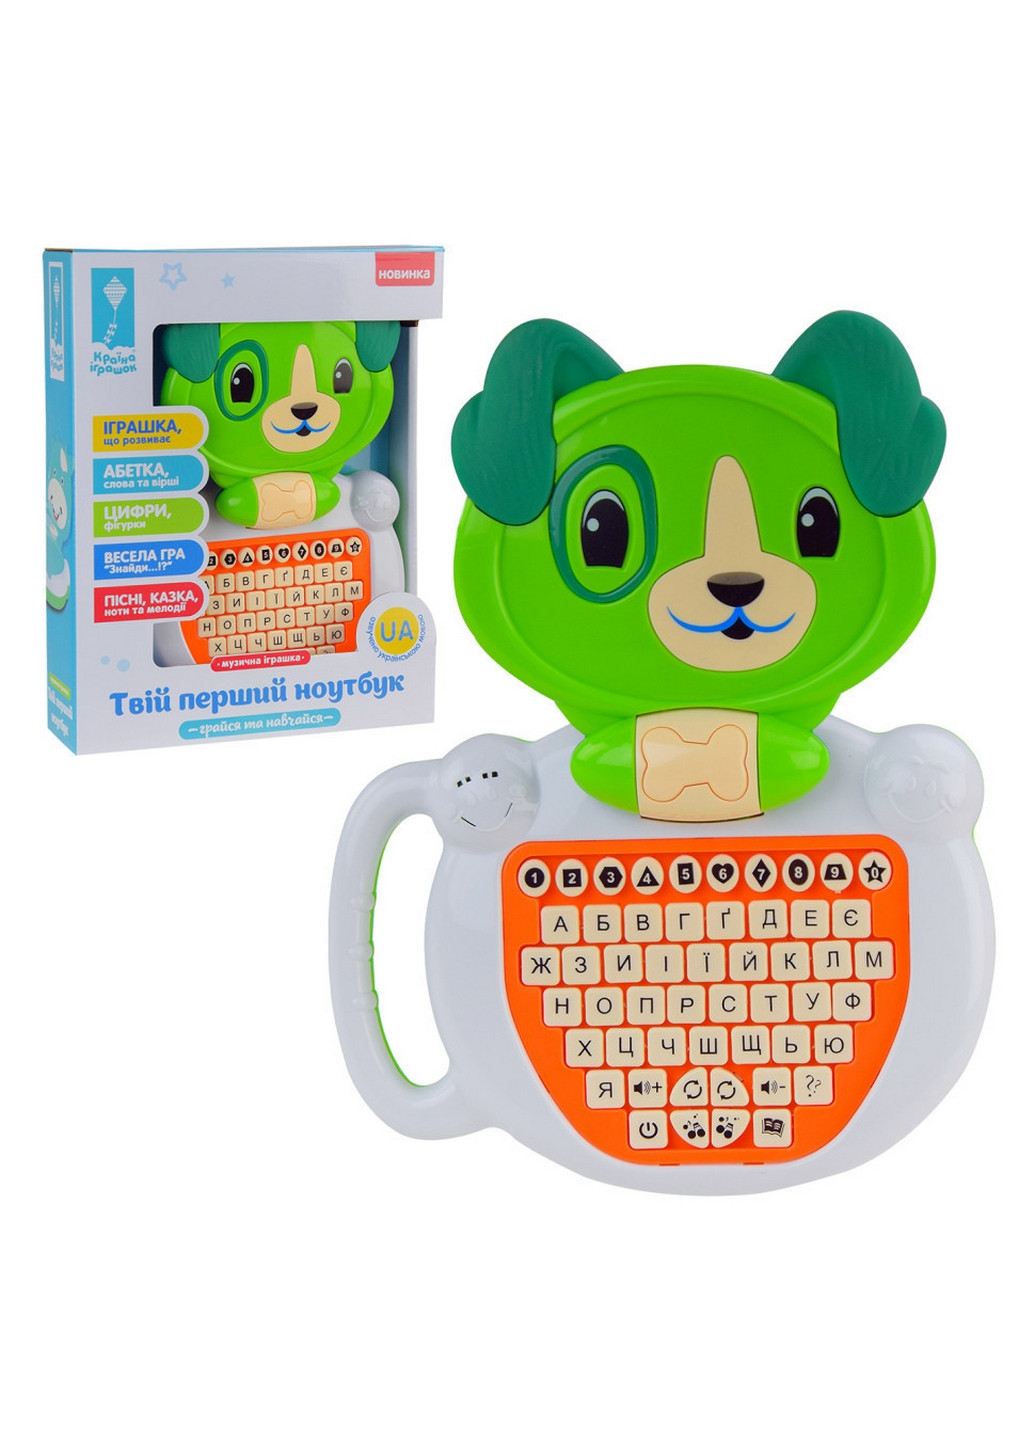 Детский ноутбук Собачка на украинском языке 7х25,5х20,5 см Країна іграшок (260512504)